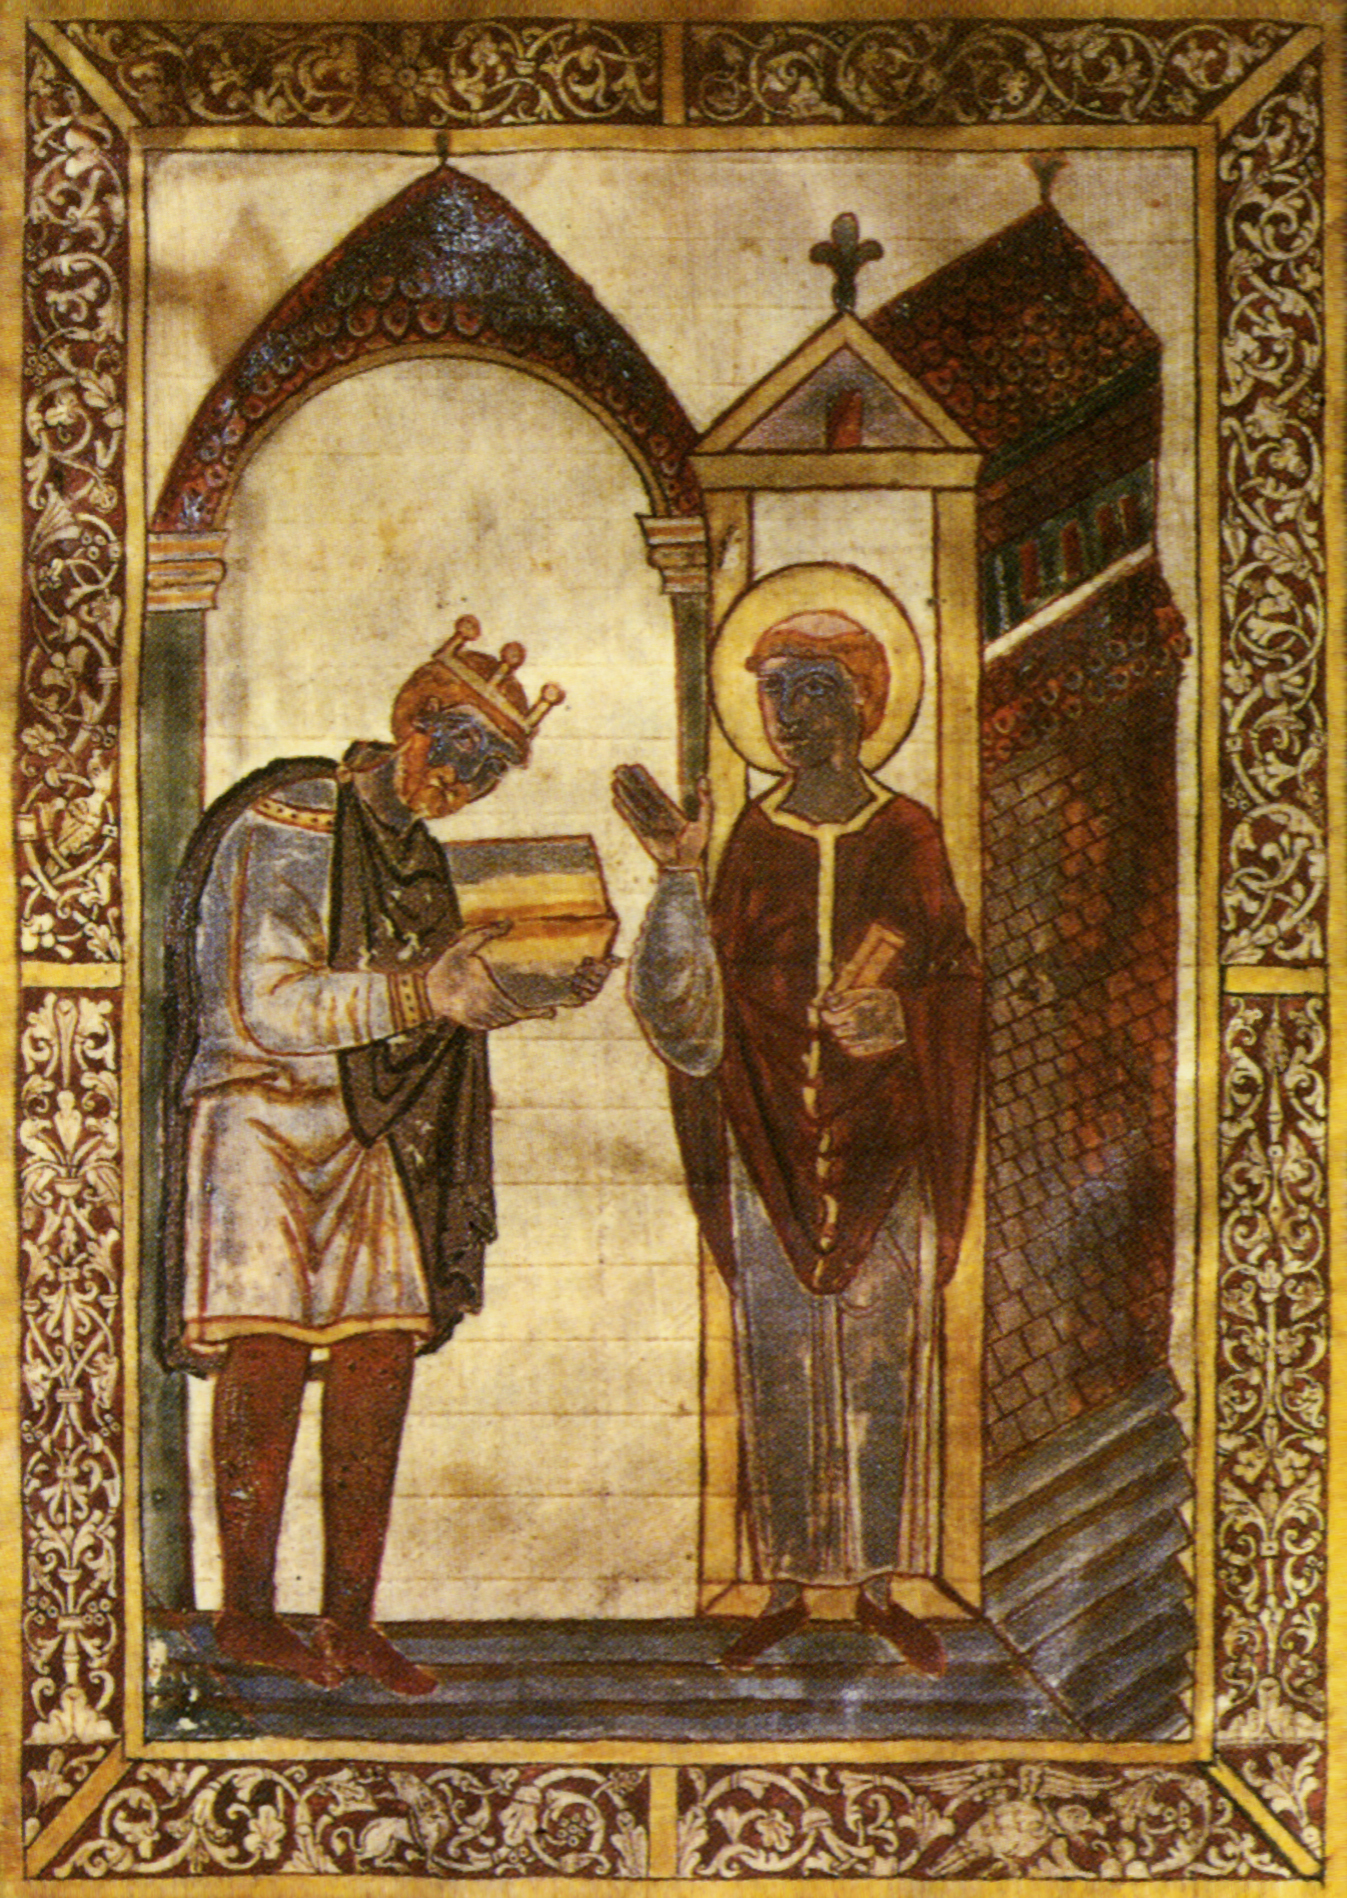 Фронтиспис жизни Святого Кутберта by Неизвестный Художни - c. 930 - 29.2 X 20 см 